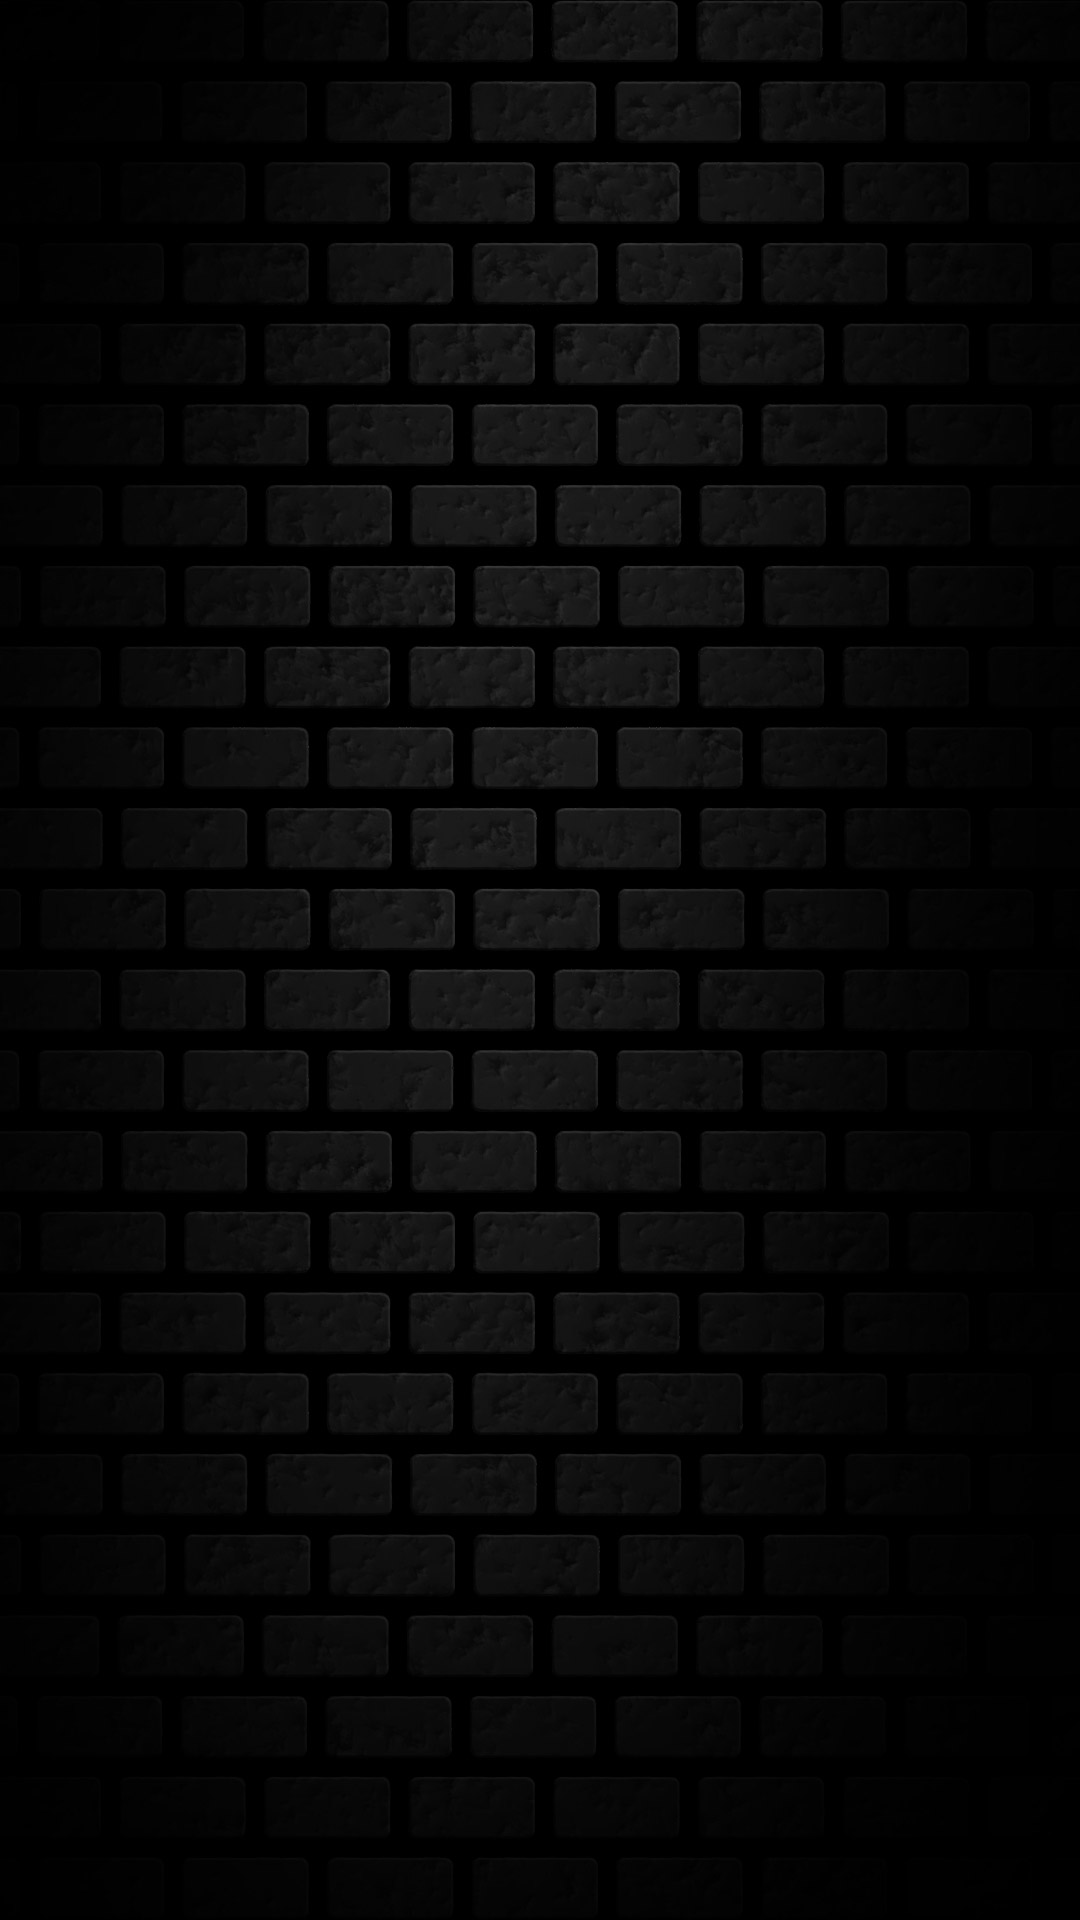 aesthetic black wall background image